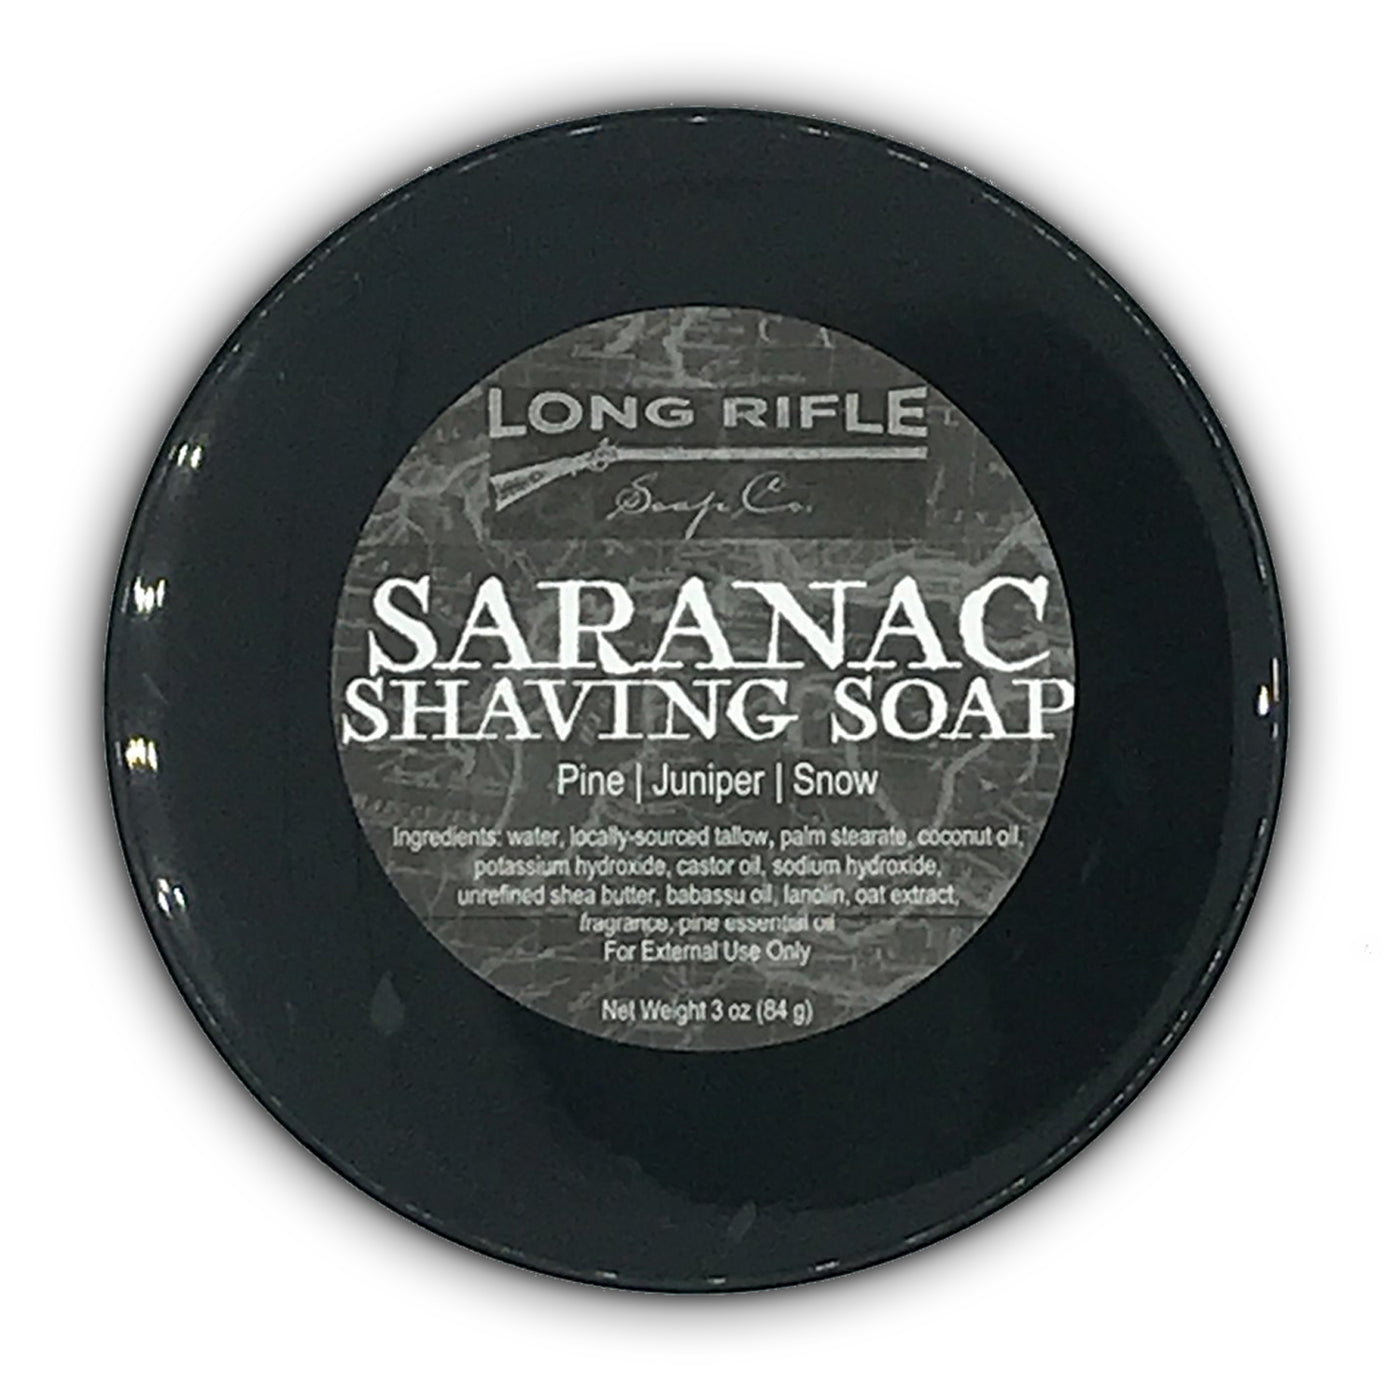  Saranac Shaving Soap by Long Rifle sold by Naked Armor Razors